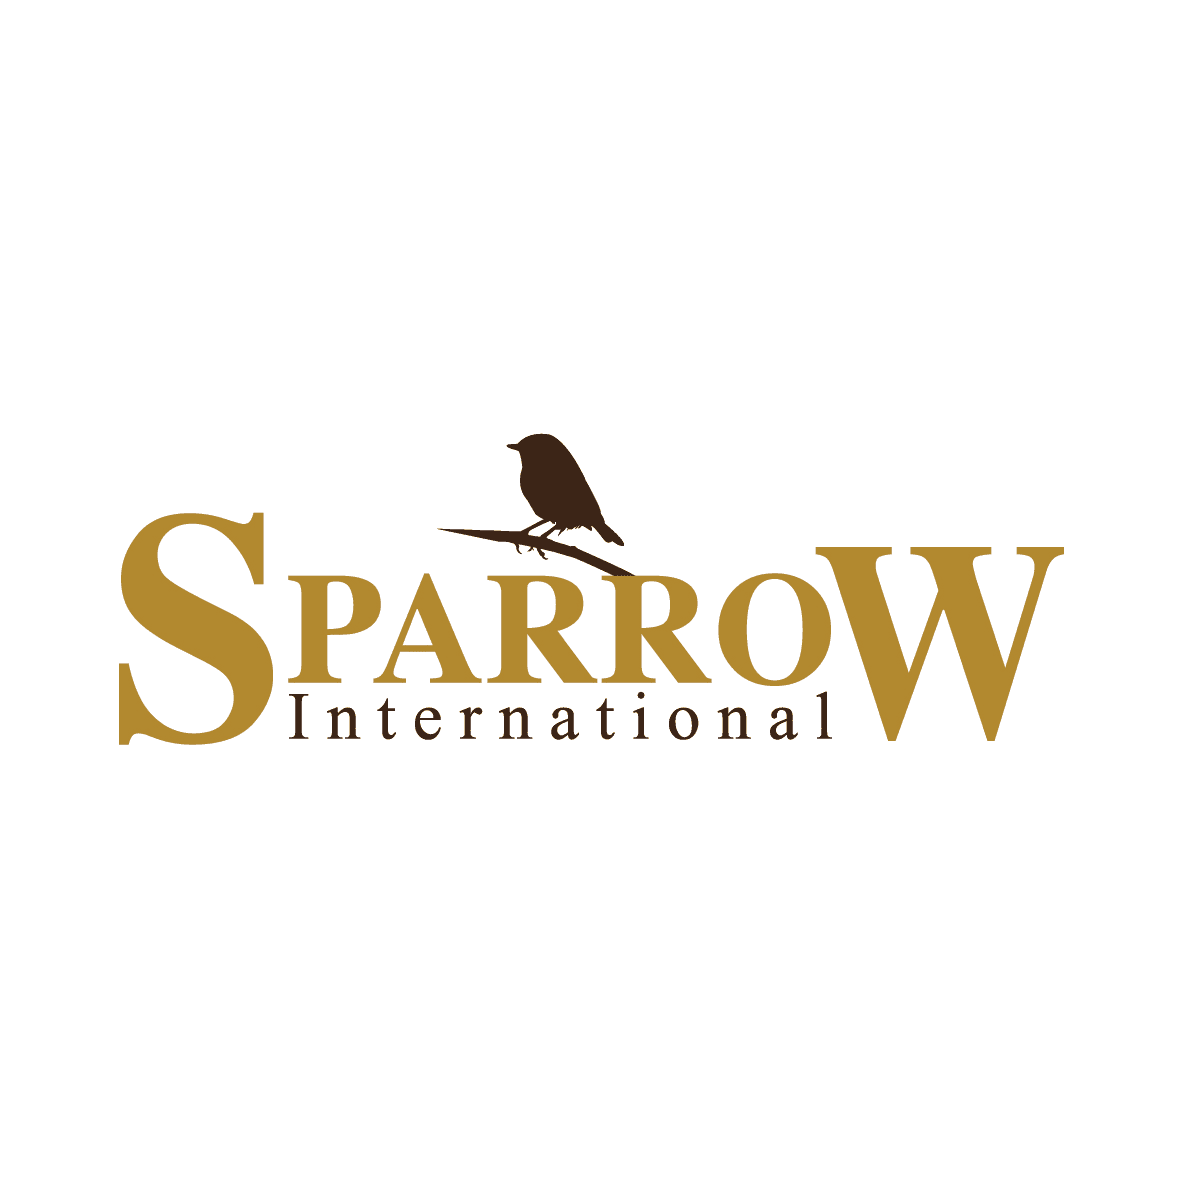 Sparrow International